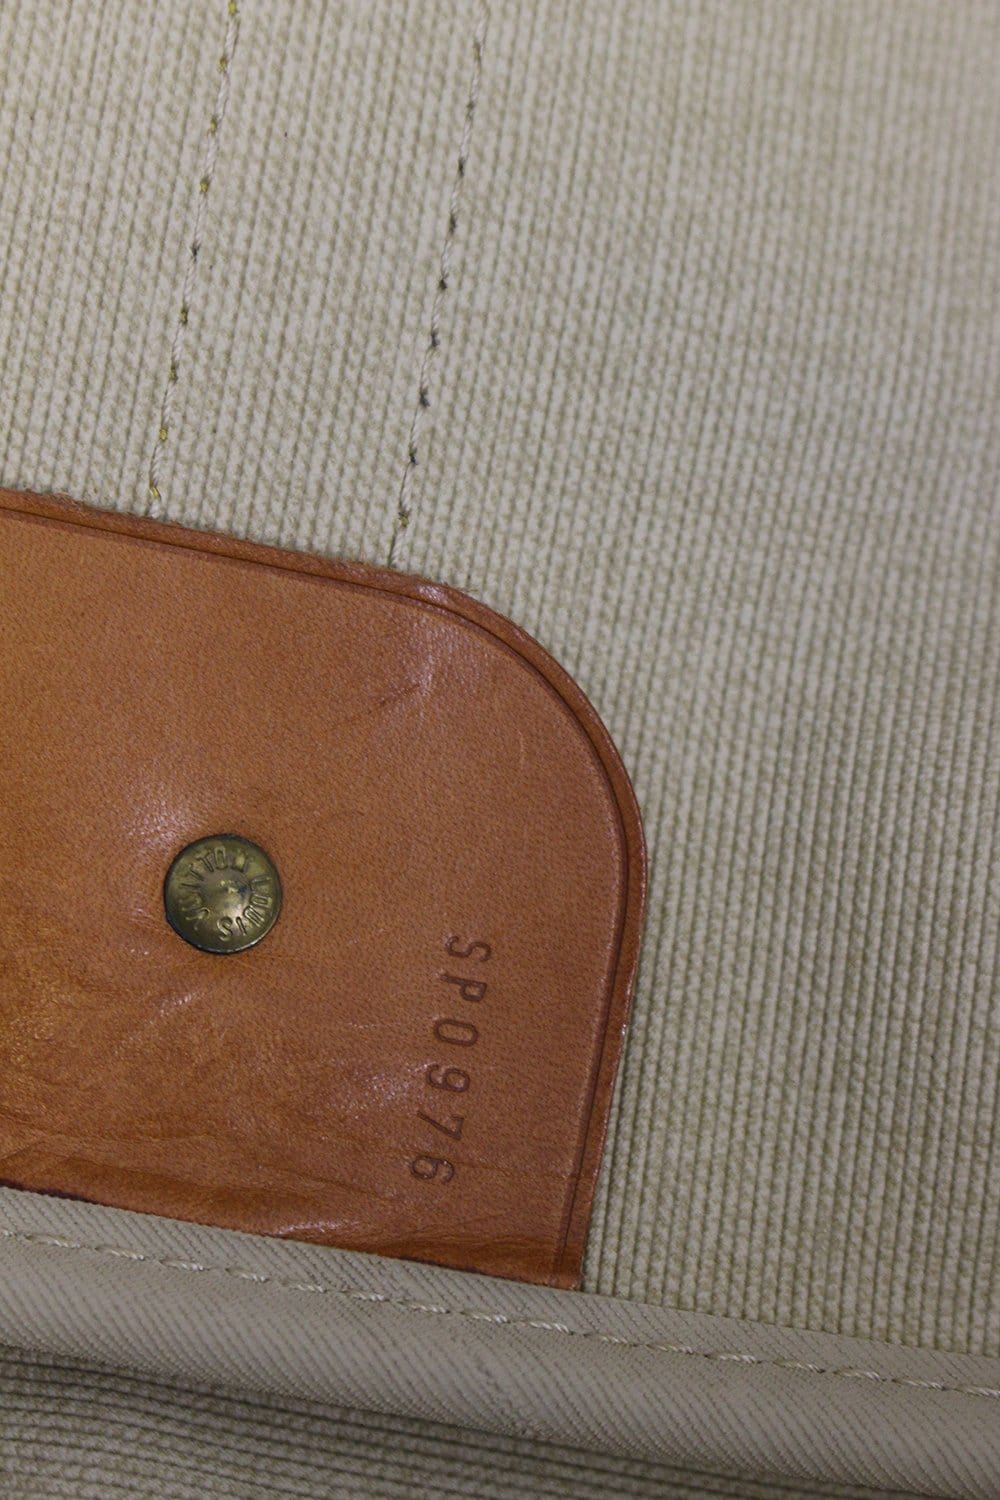 valise louis vuitton sirius 70 monogram 1995